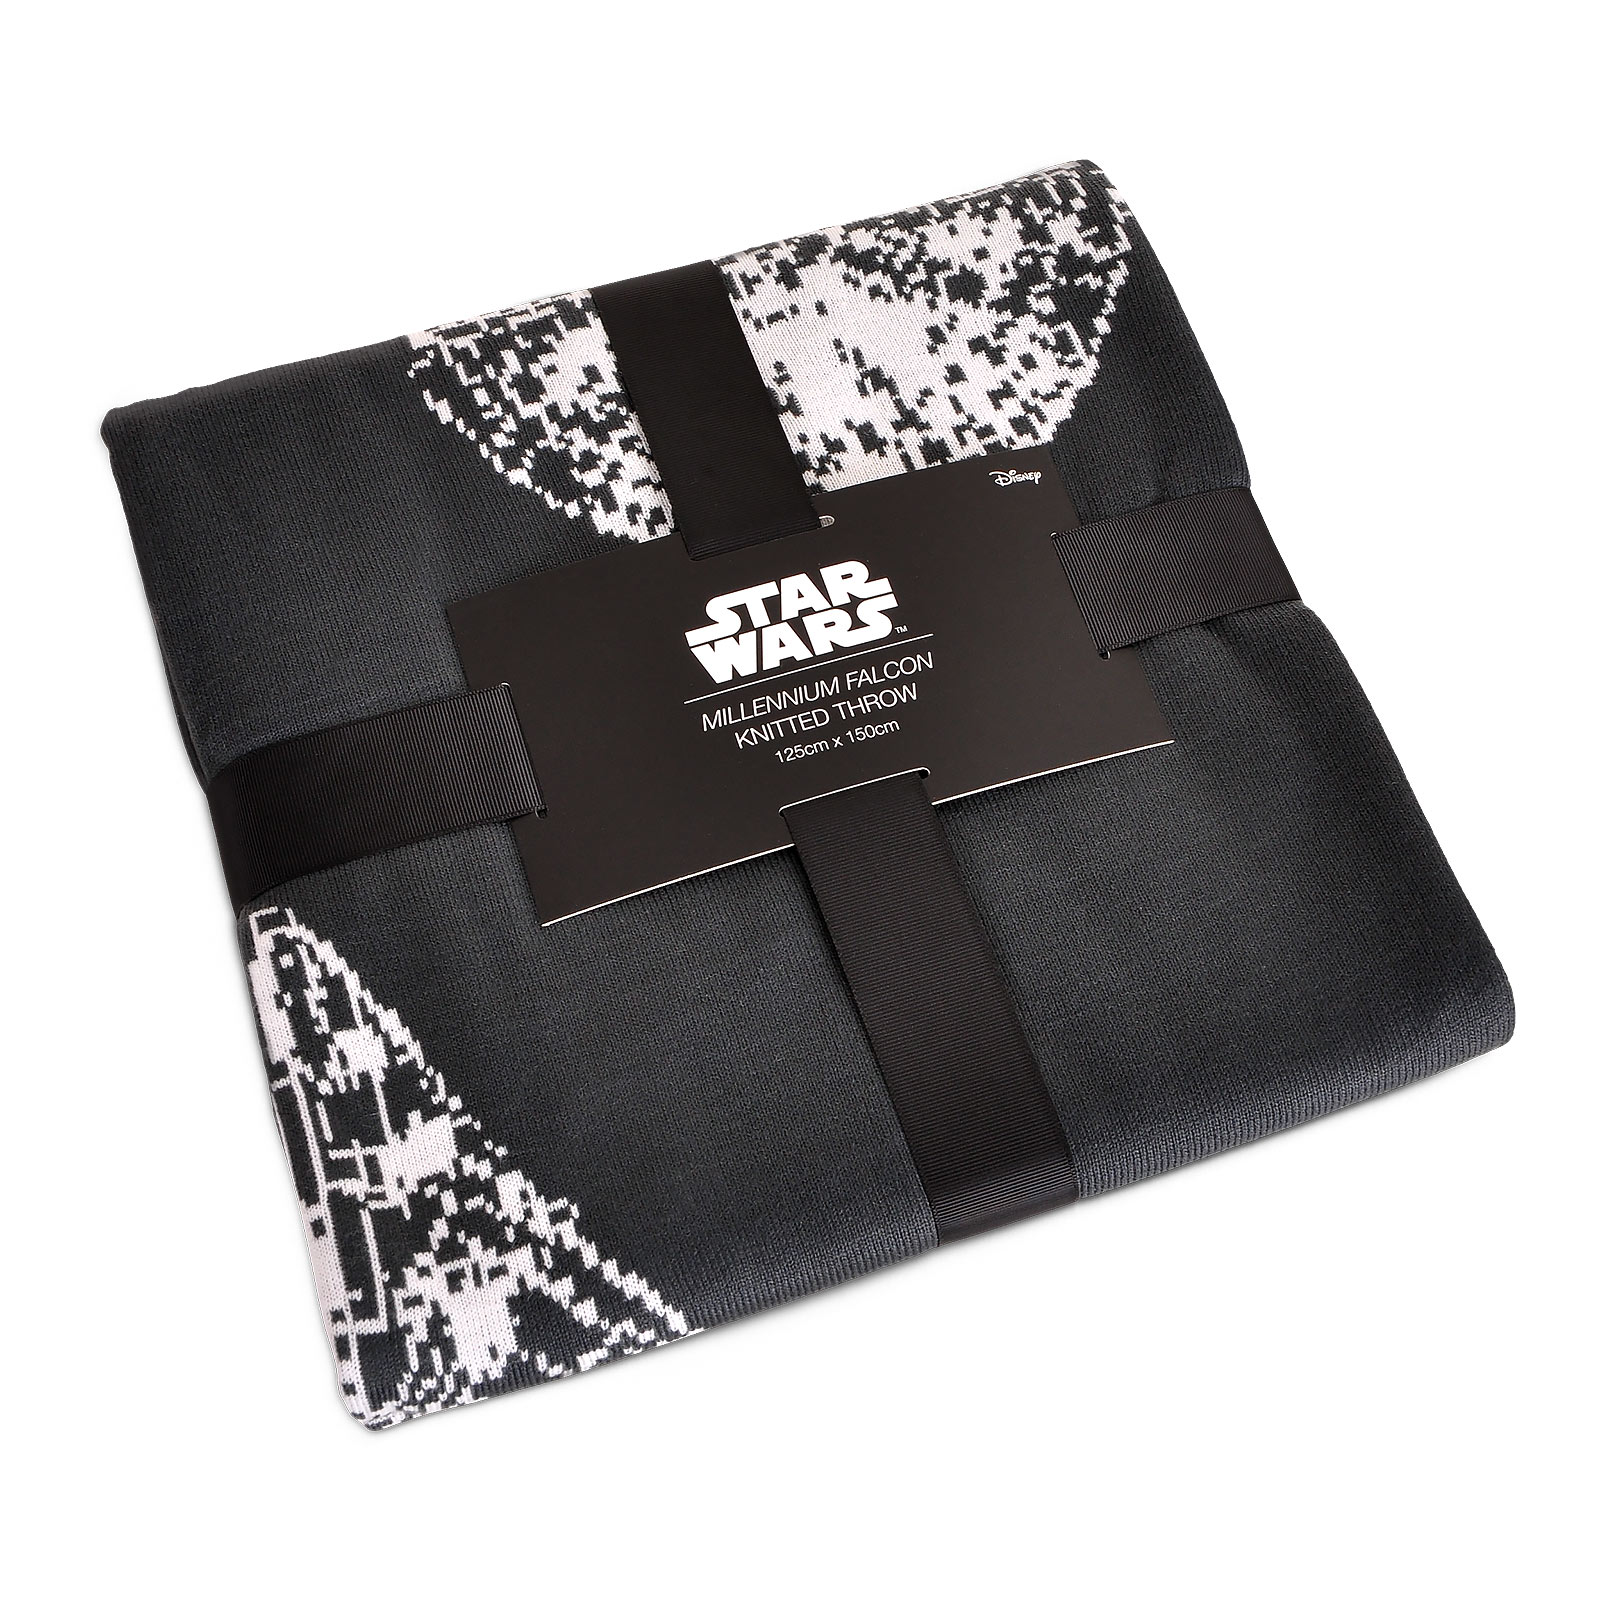 Star Wars - Millennium Falcon Deluxe Blanket